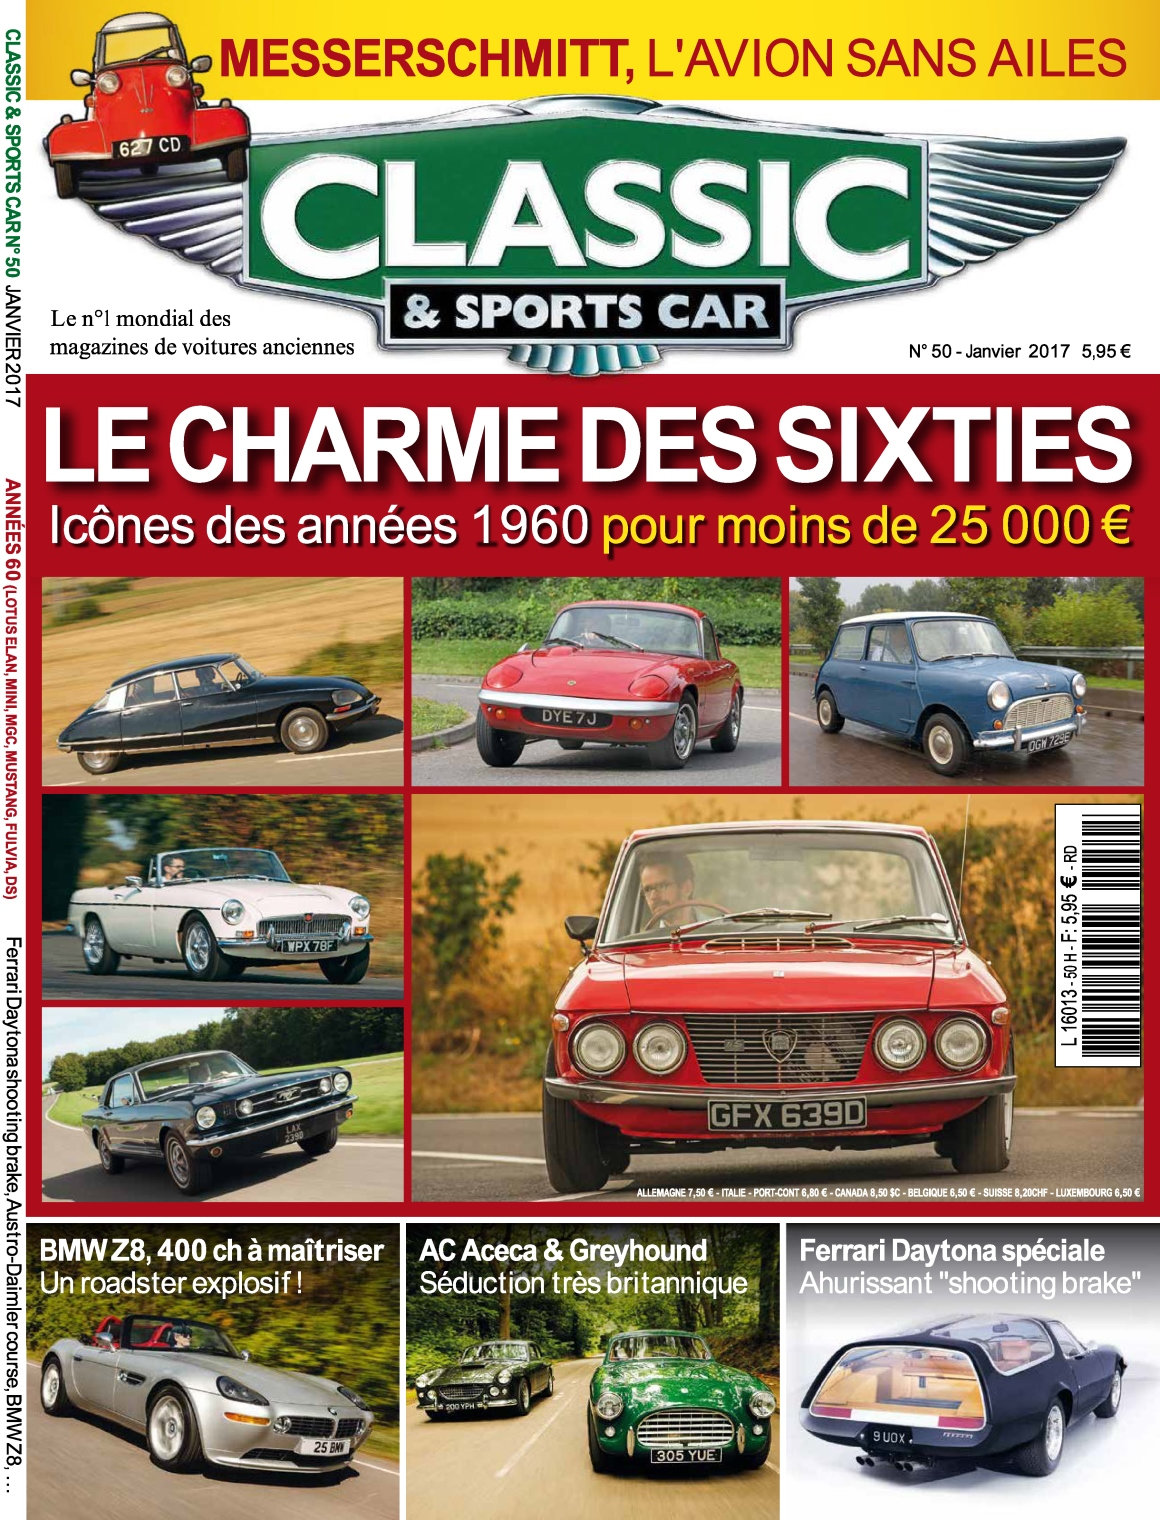 Classic & Sports Car N°50 - Janvier 2017 